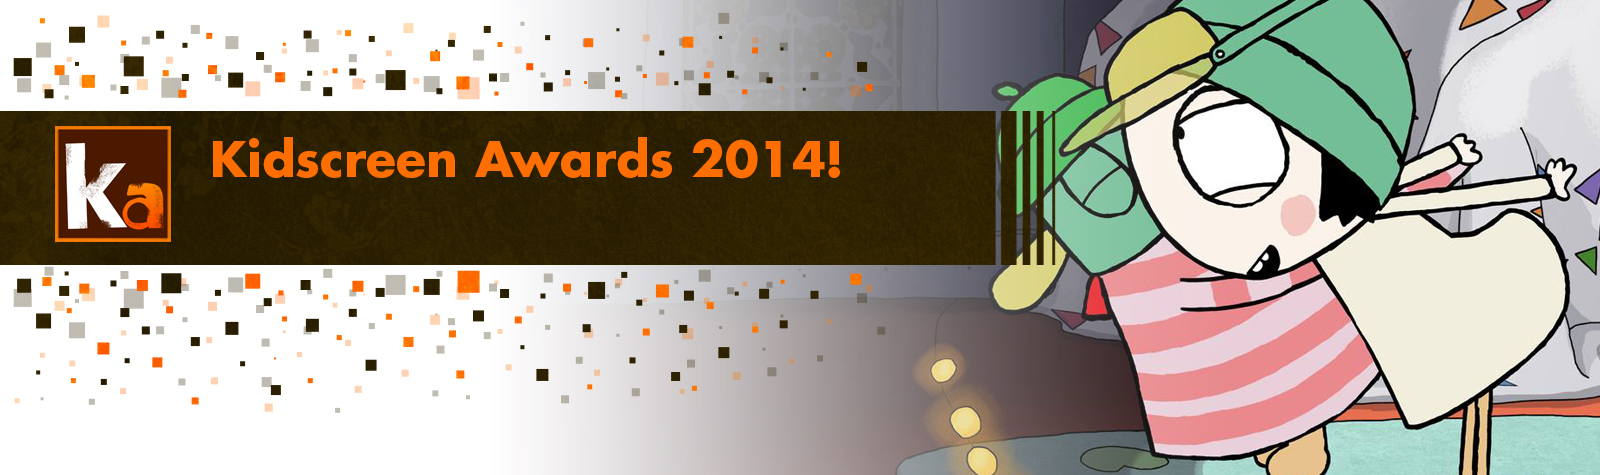 Kidscreen Awards 2014!